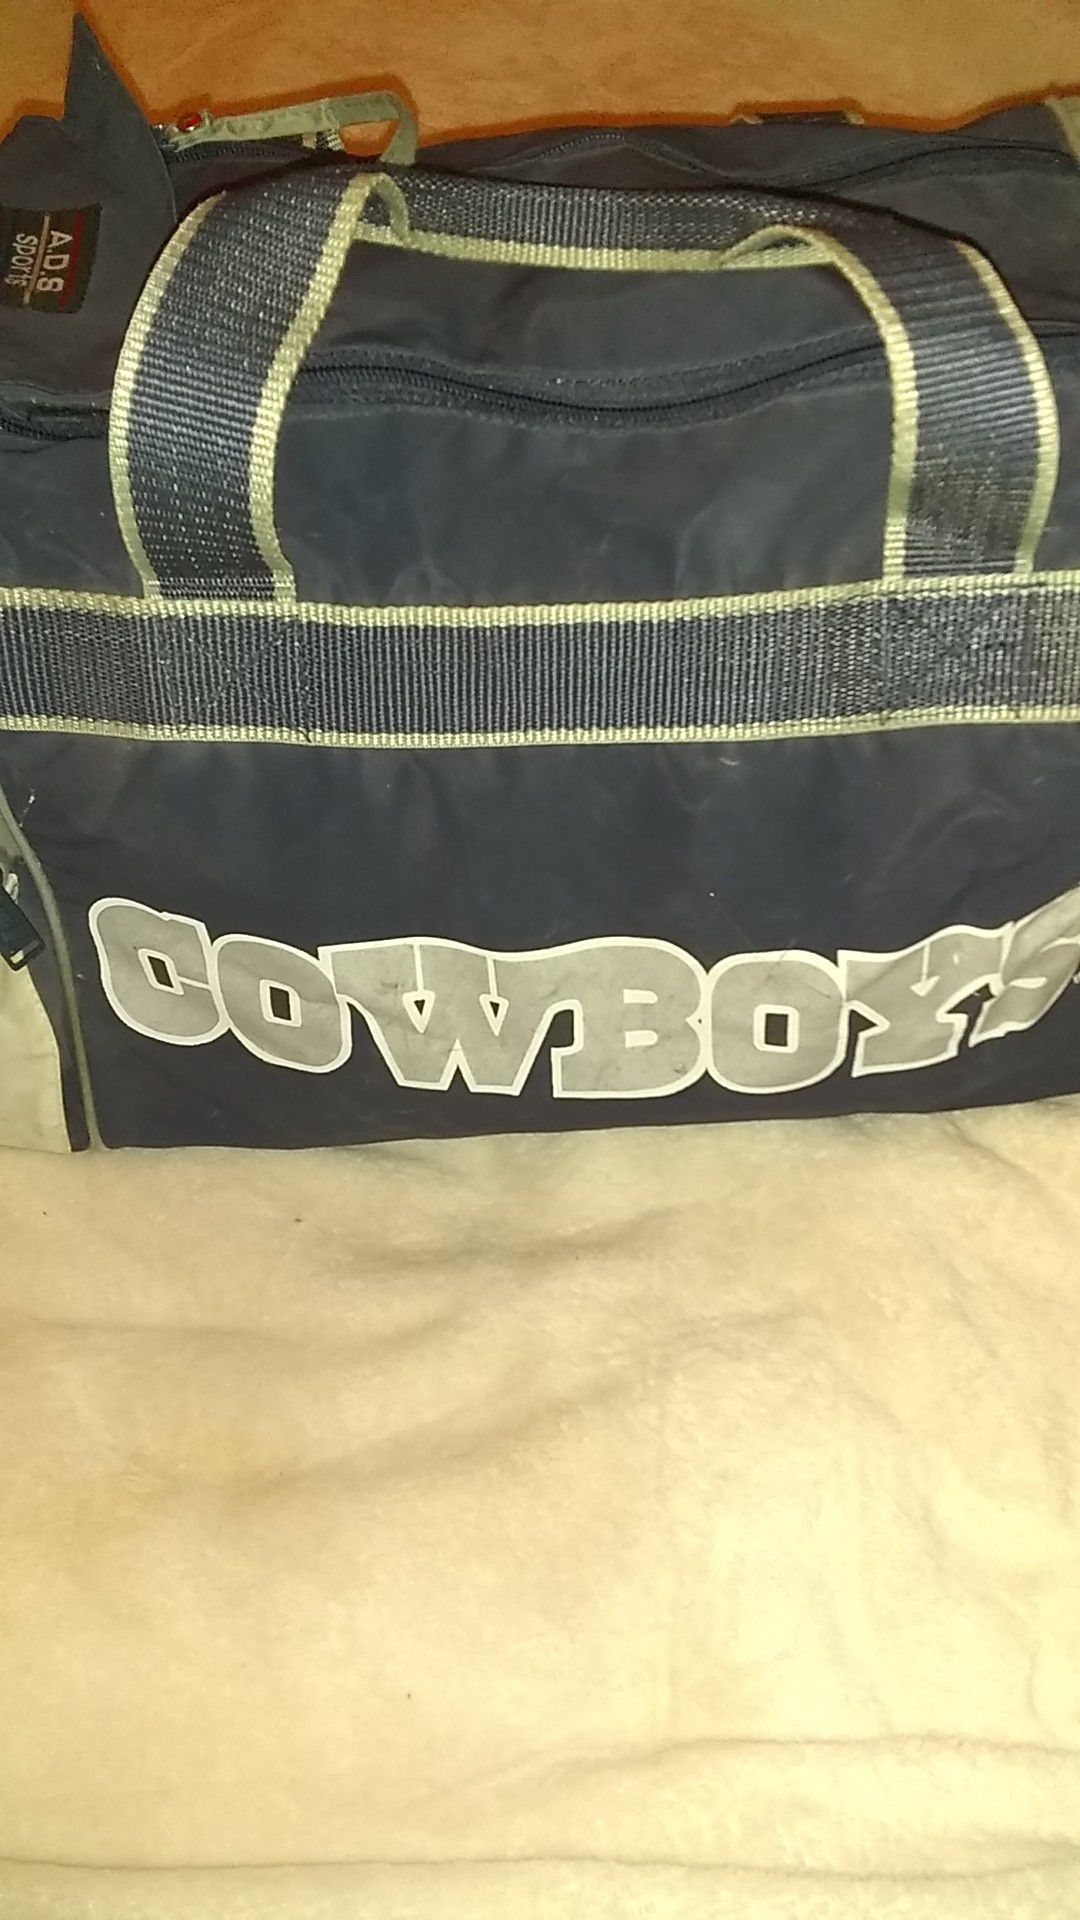 Vintage Cowboys gym bag